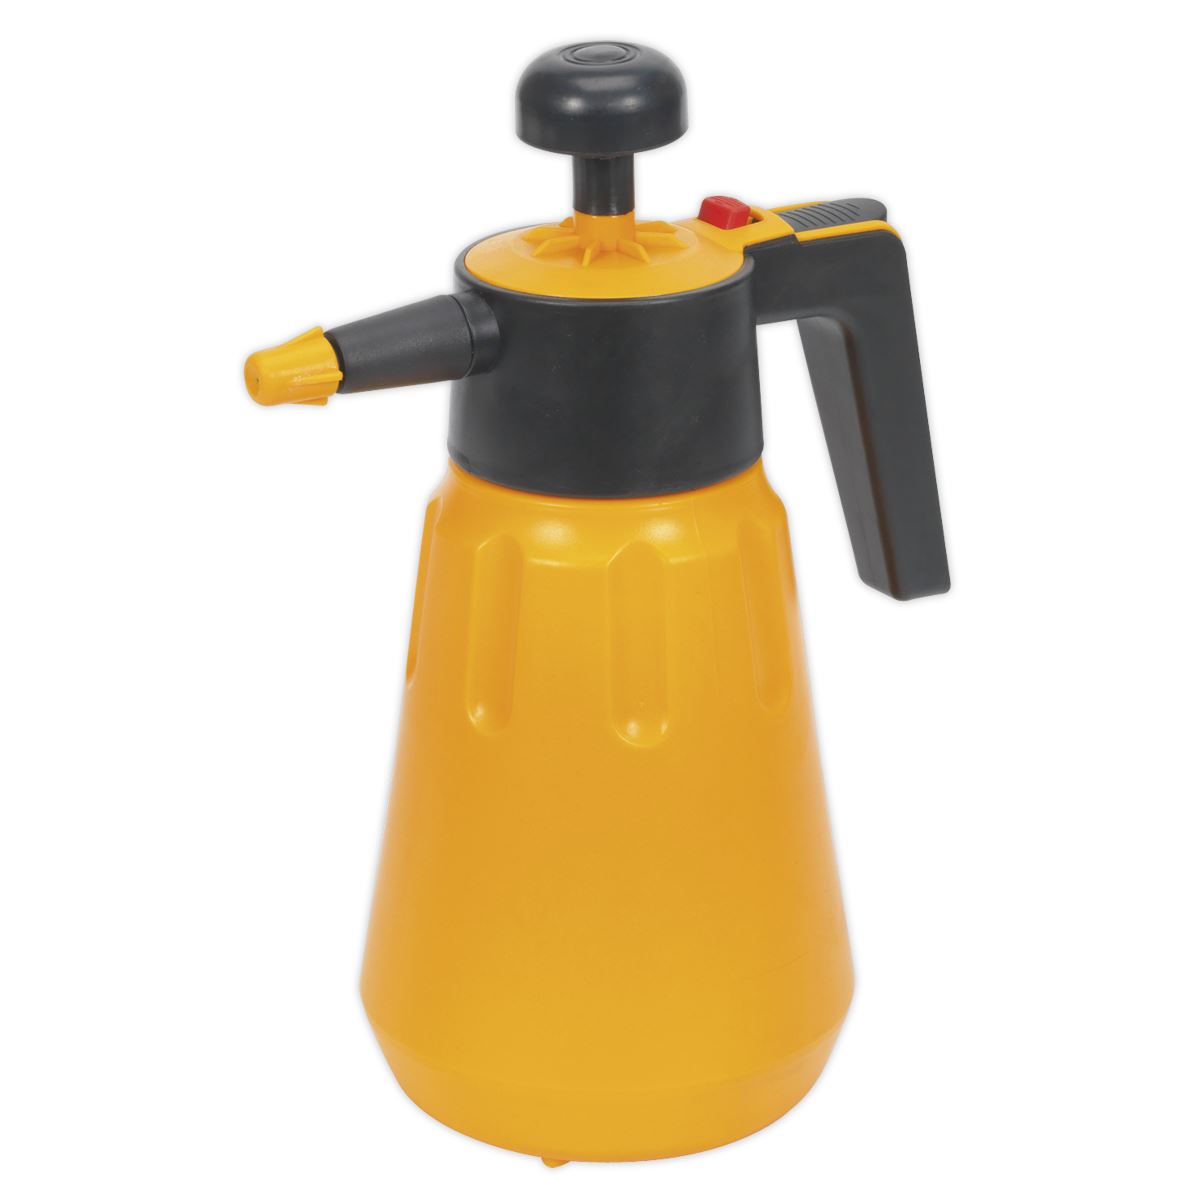 Sealey Pressure Sprayer 1.5L Hand Gardening Pesticide Herbicide Fluid Bottle